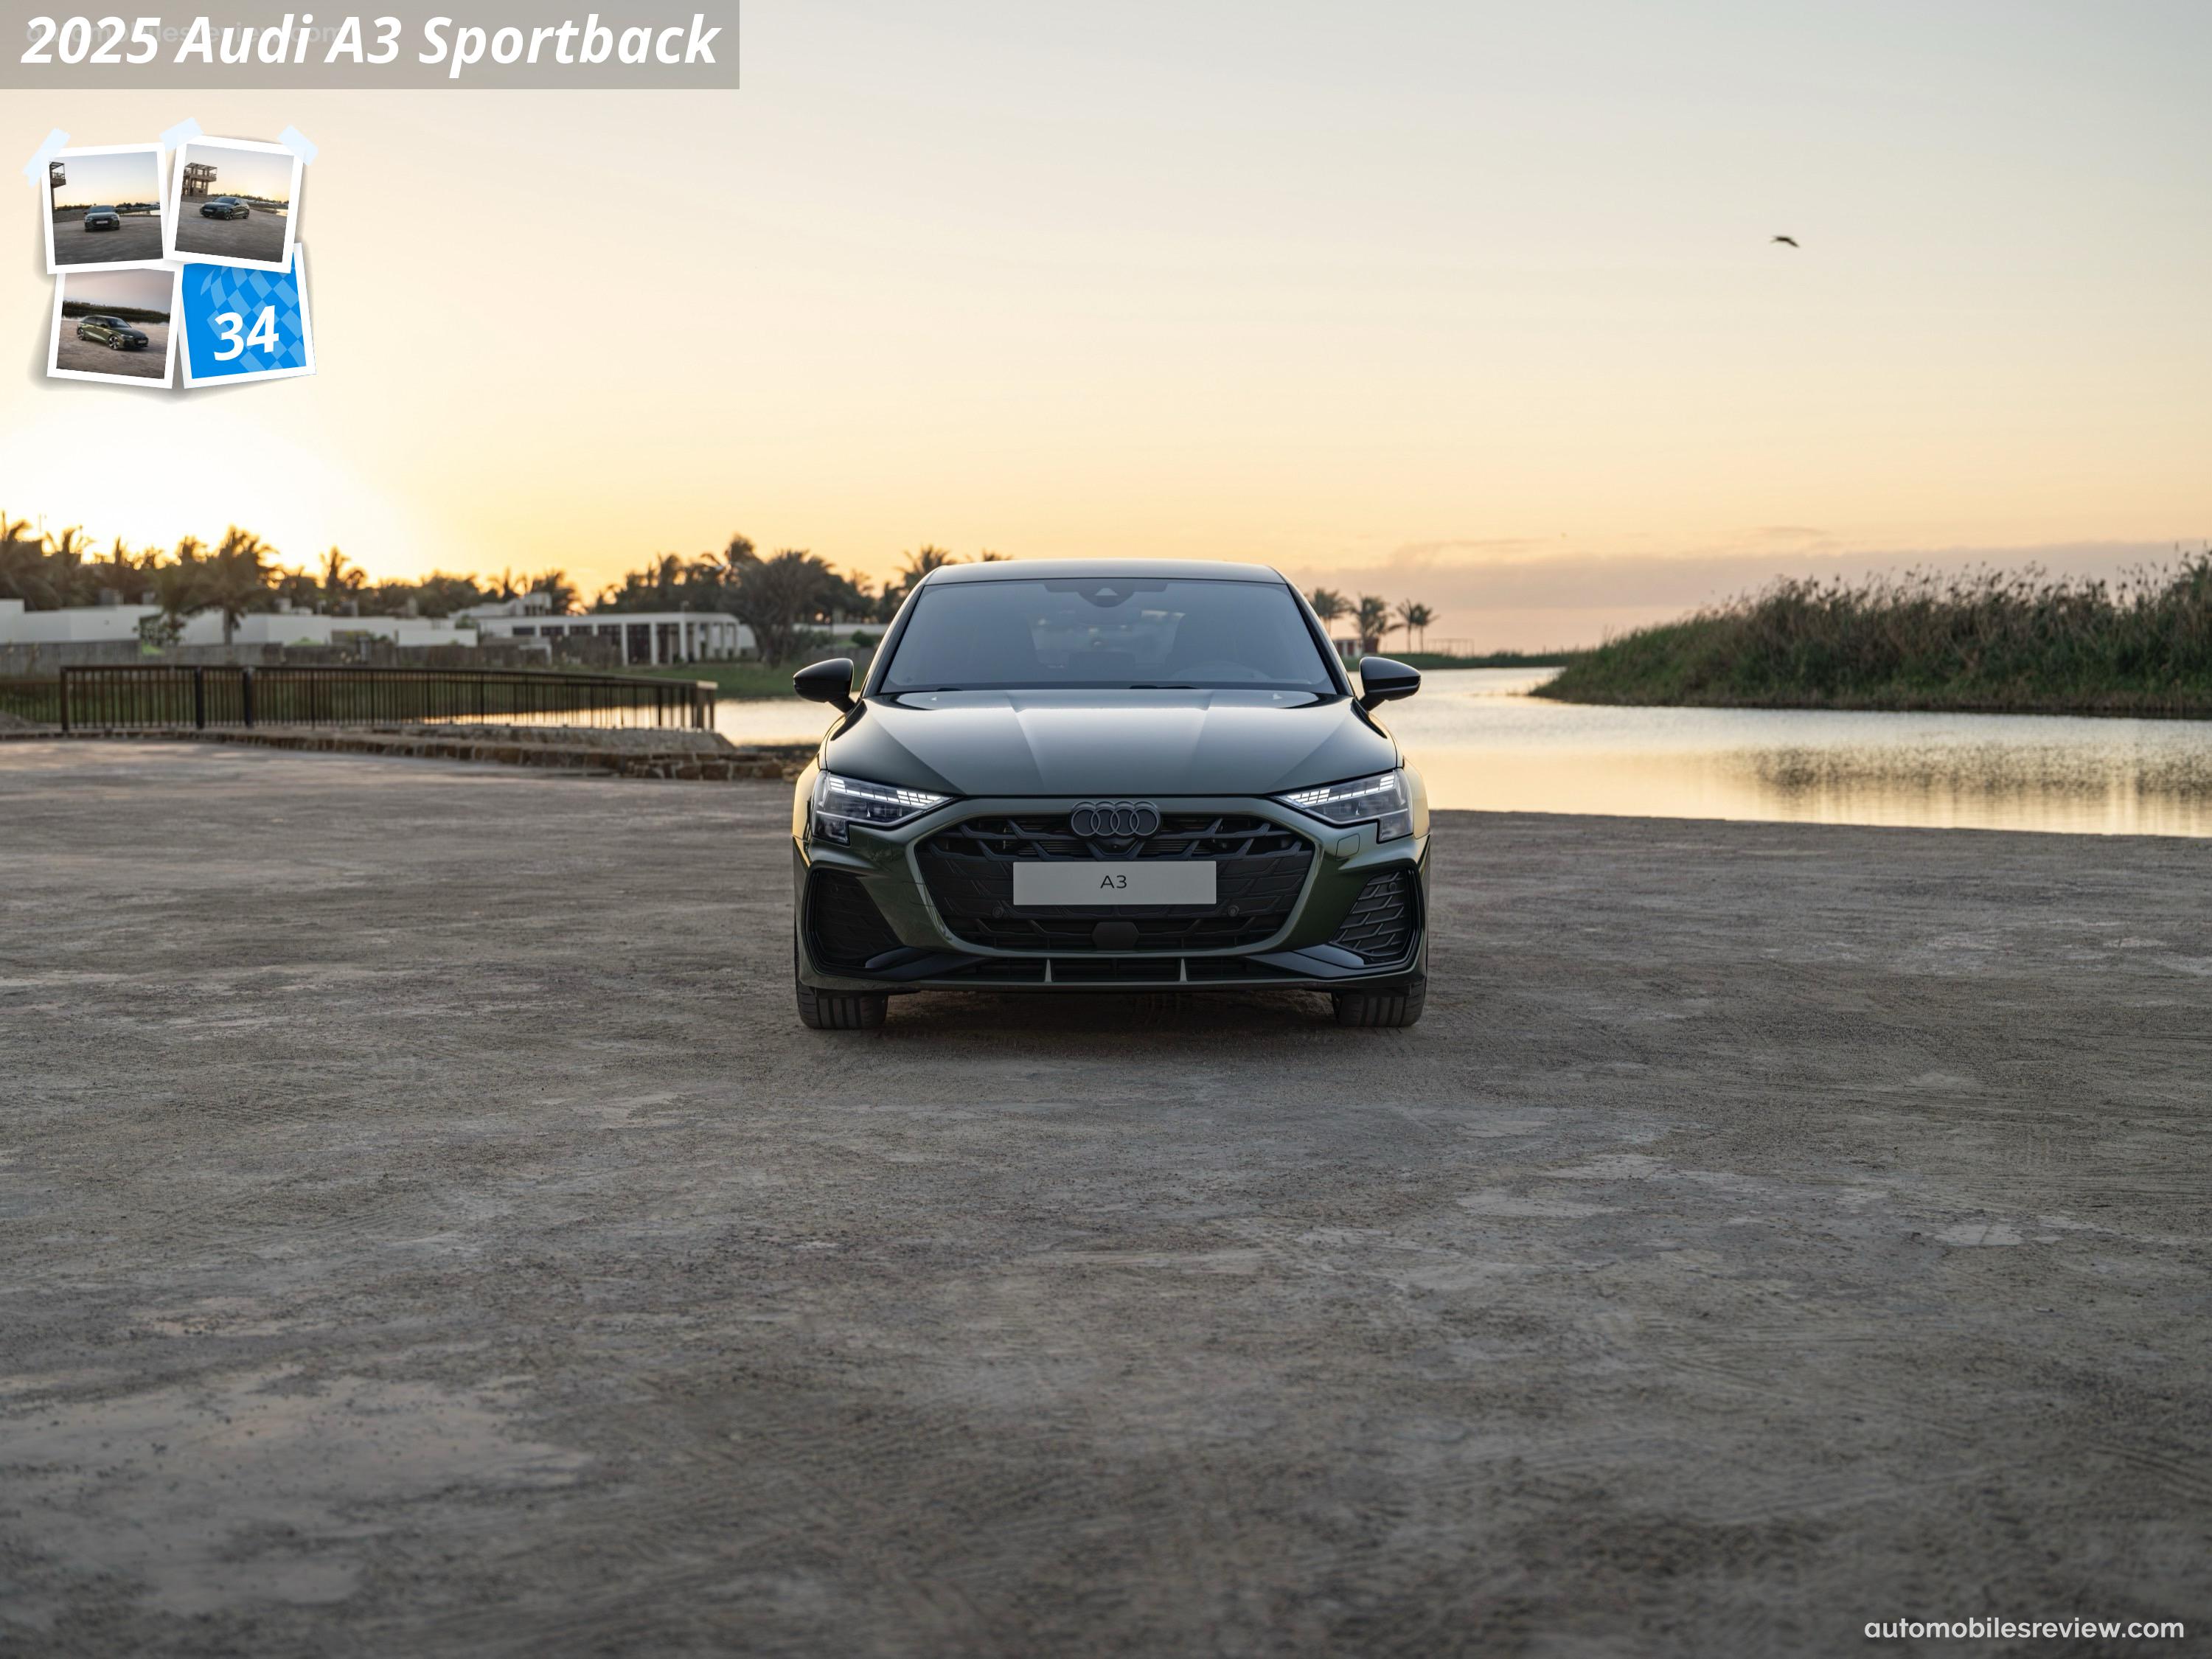 Audi A3 Sportback (2025)